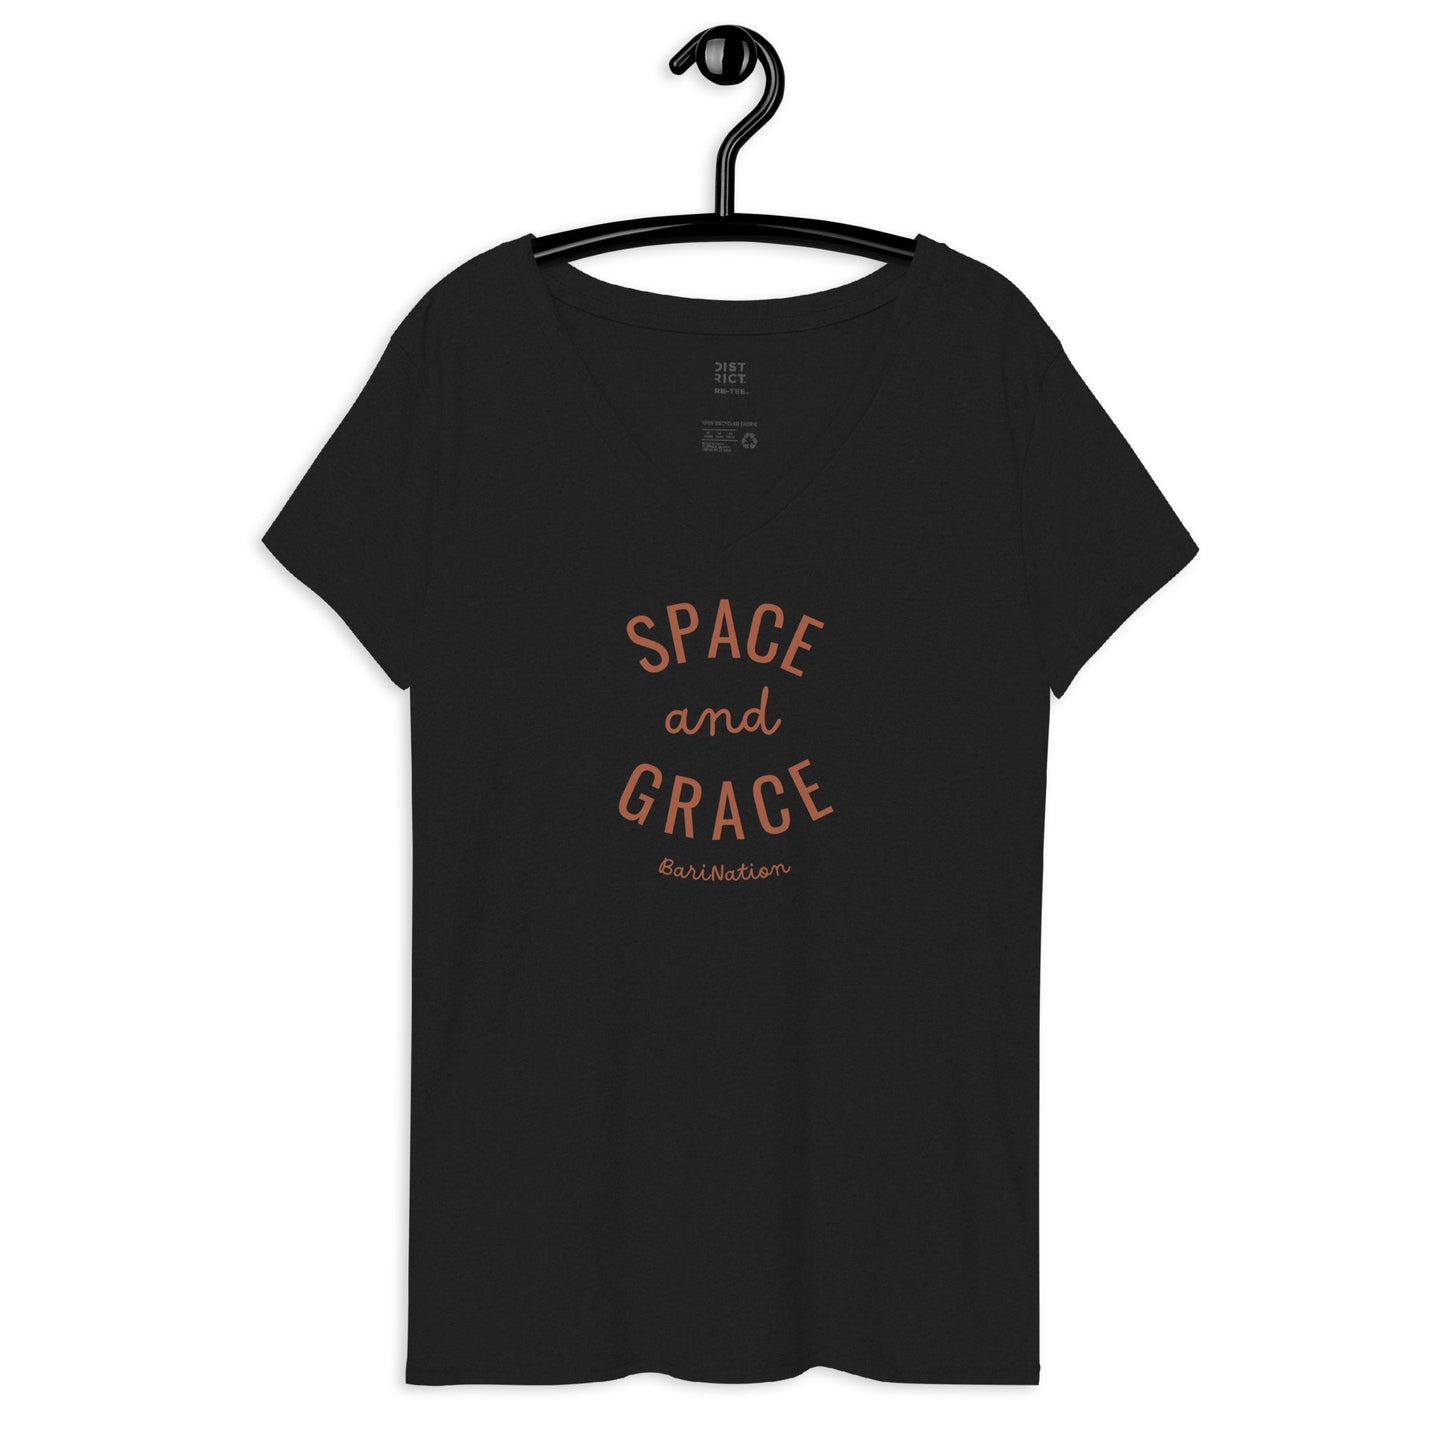 Space & Grace Women’s V-Neck T-Shirt